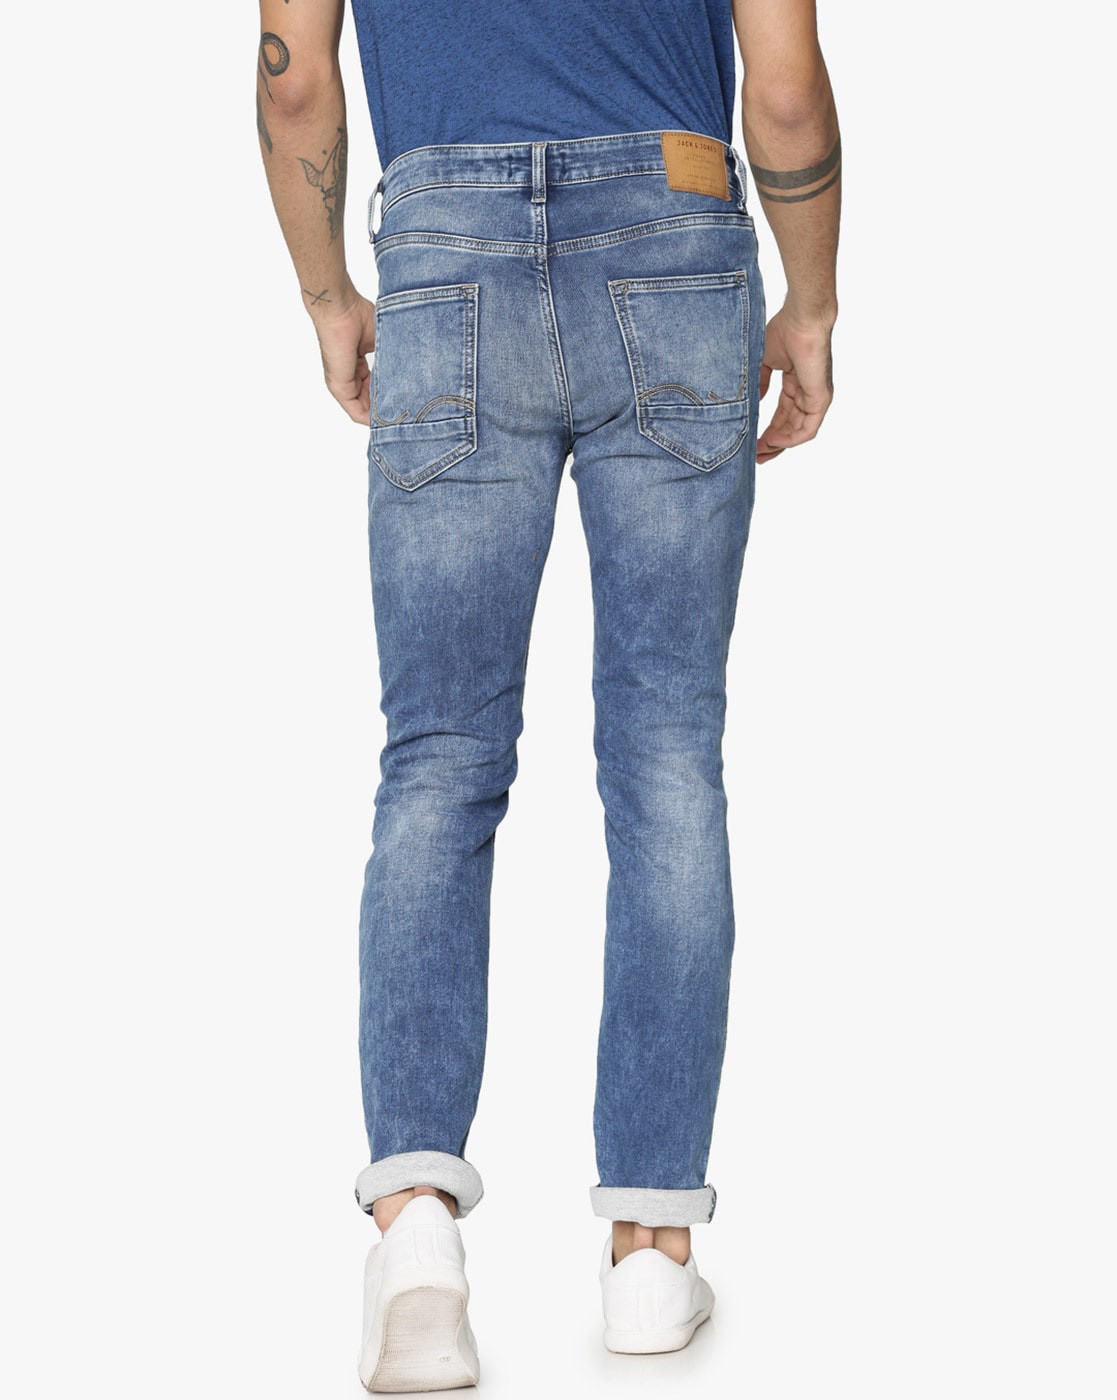 Jack & Jones Denims Jeans, Blue at Rs 725/piece in Bengaluru